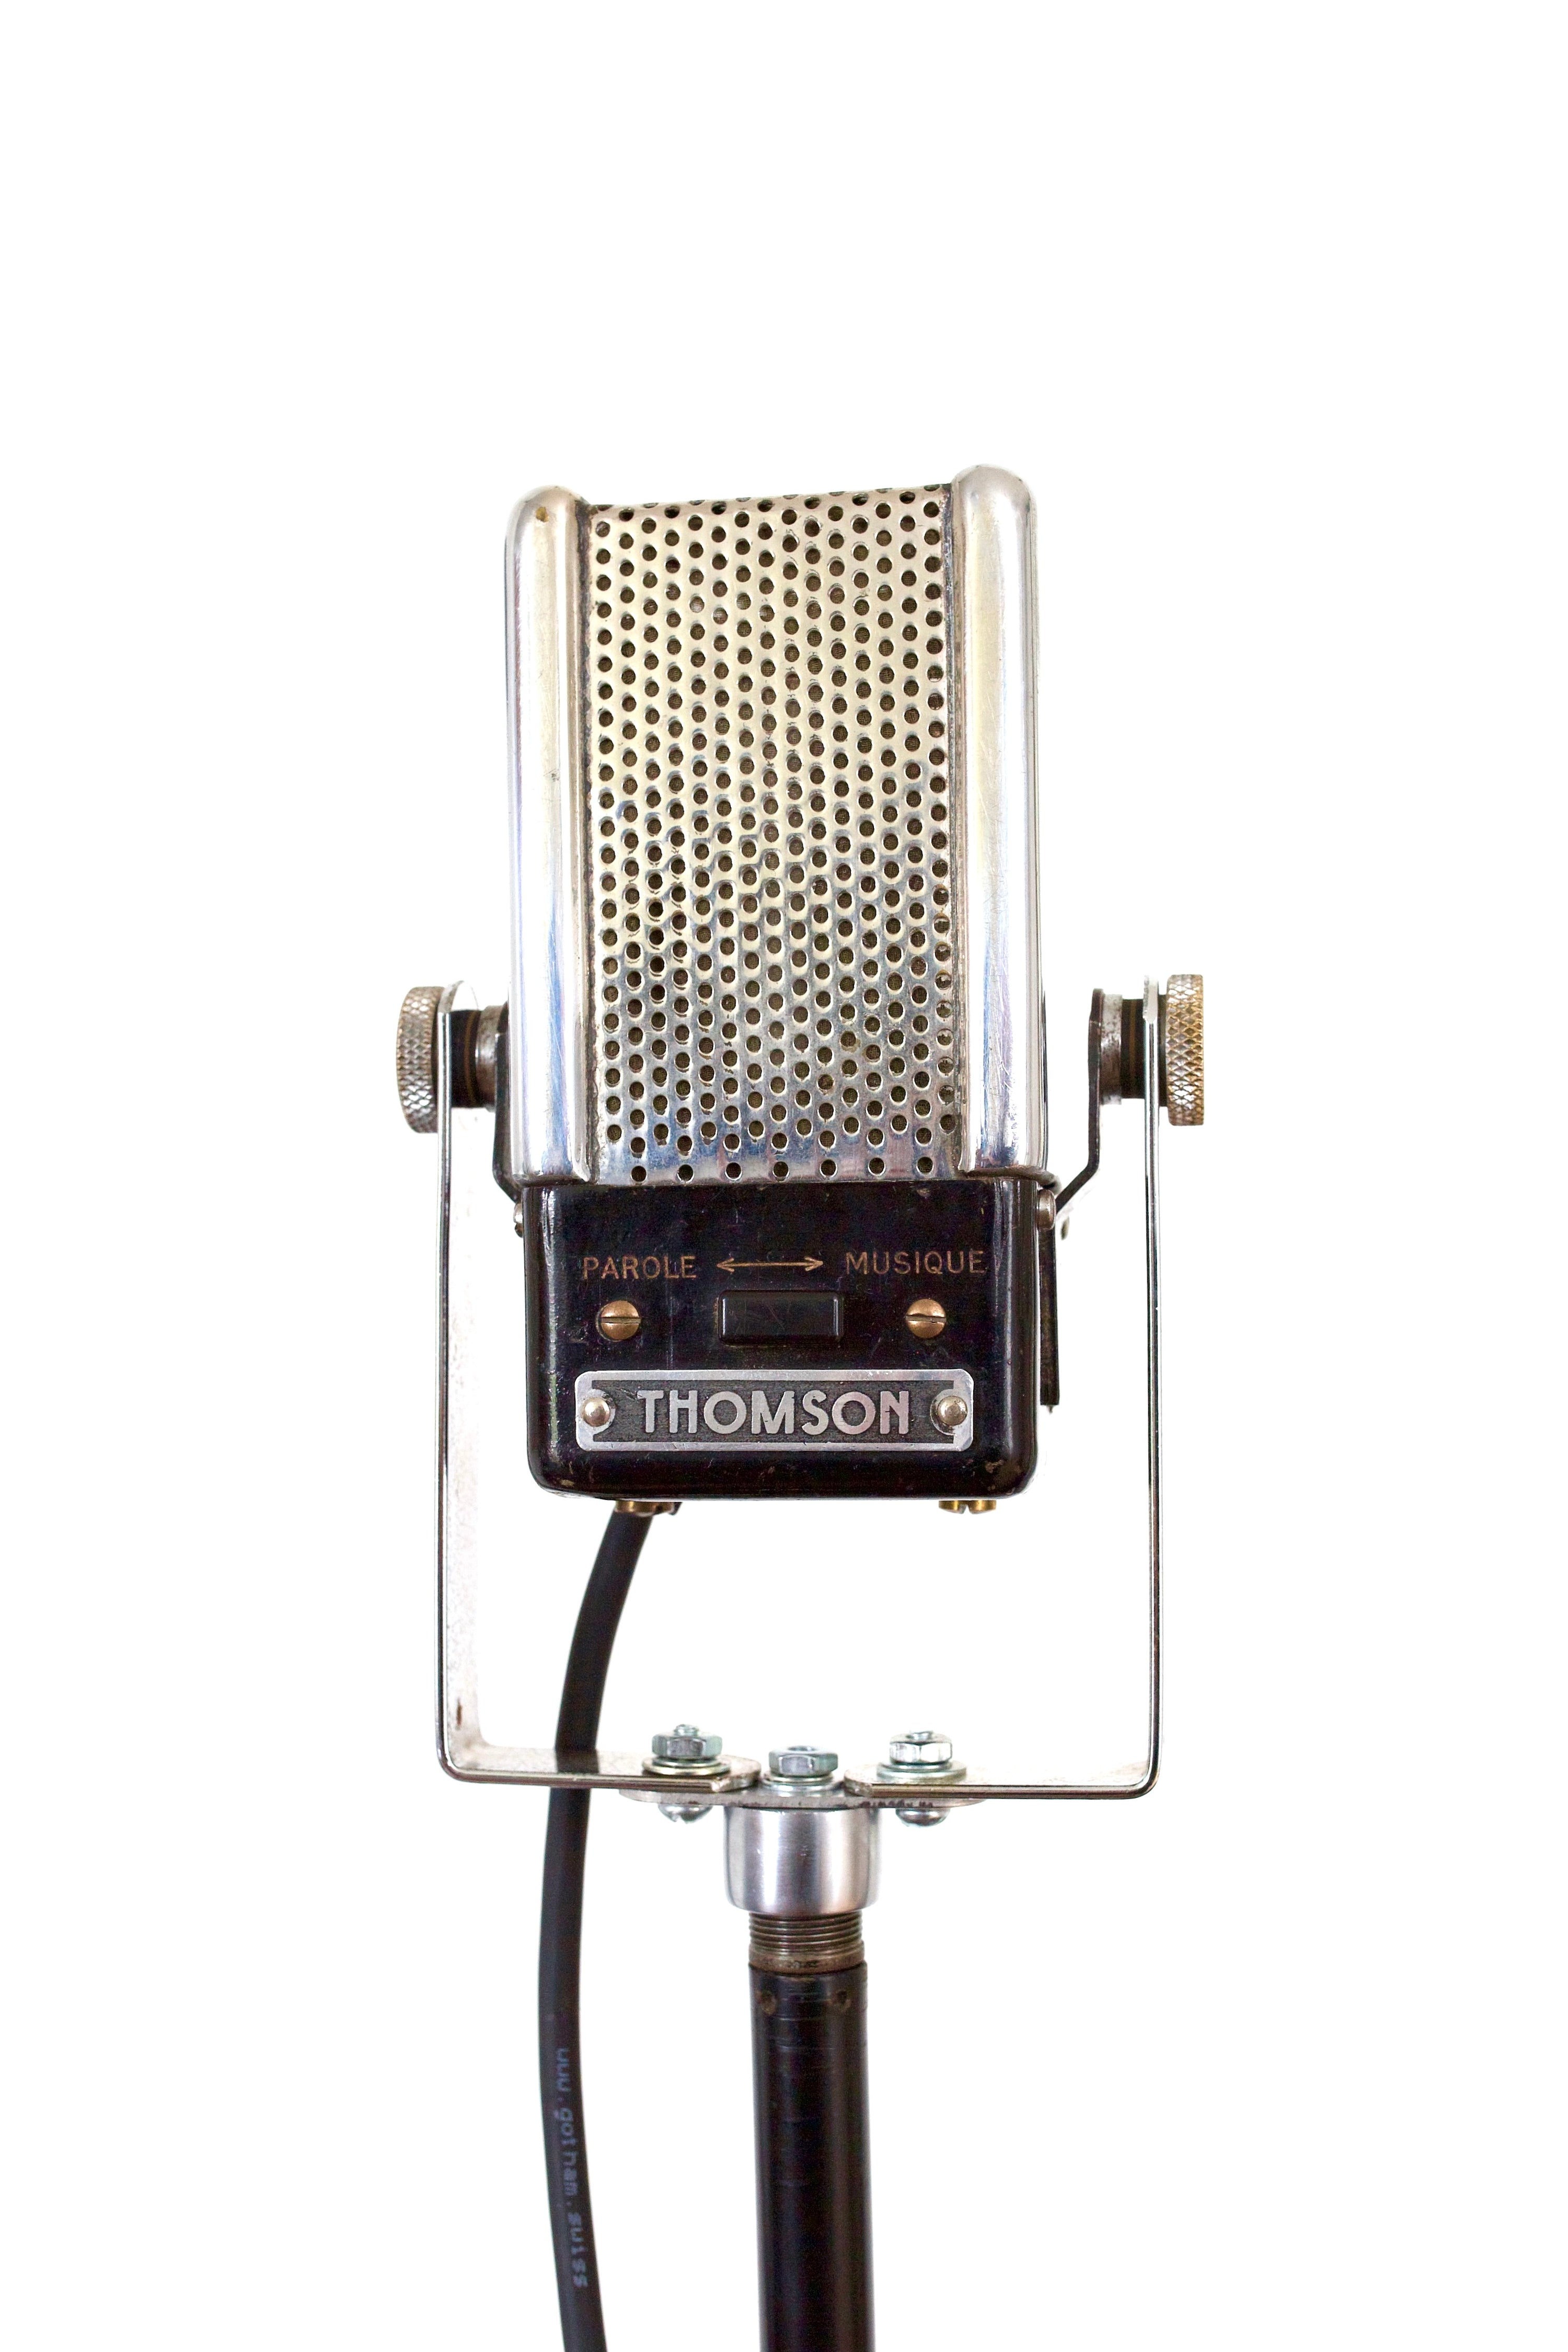 Thomson French Ribbon Microphone